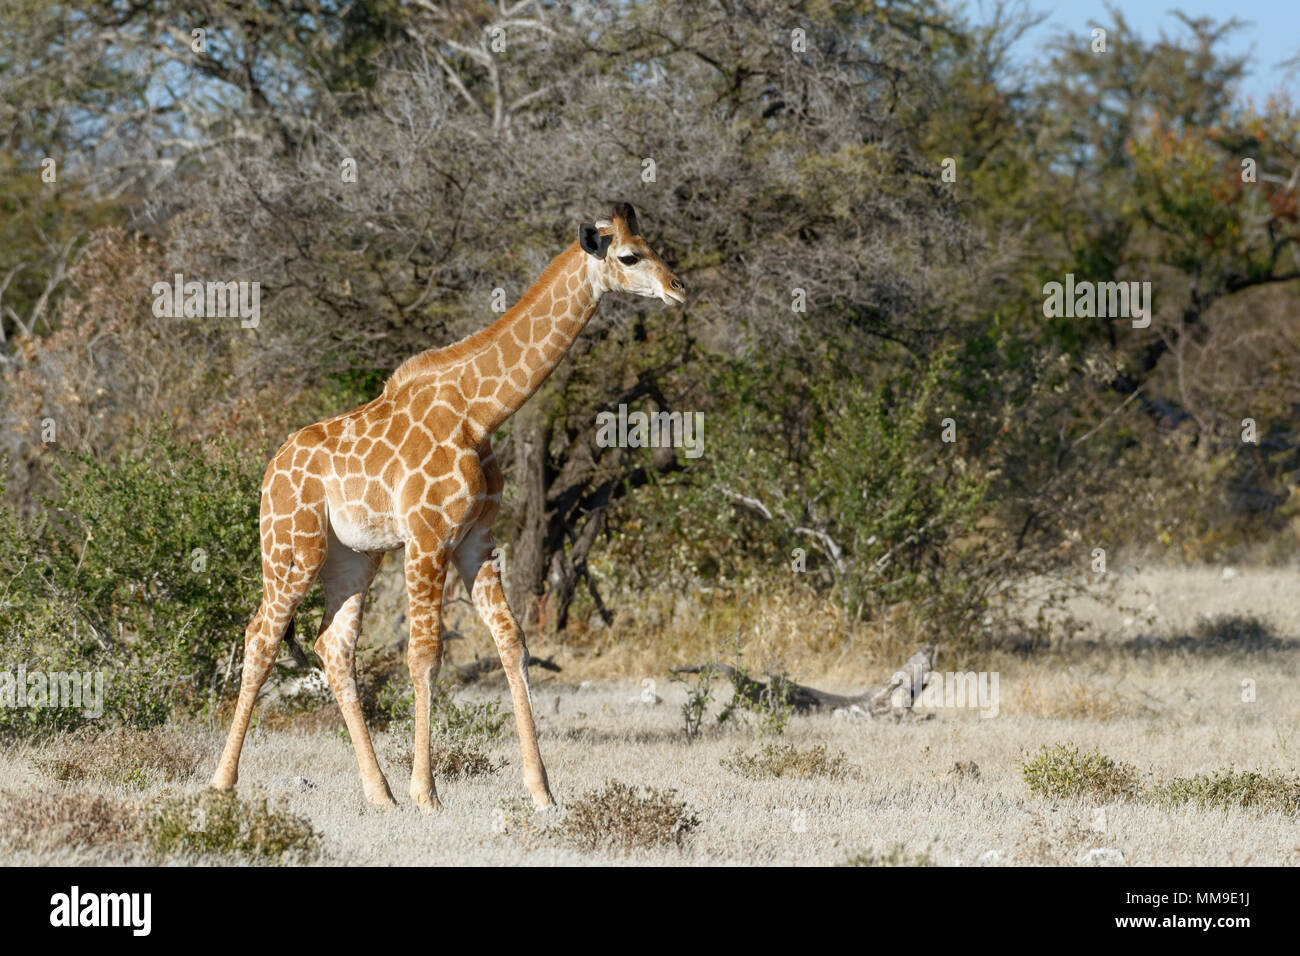 Jirafa angoleña (Giraffa camelopardalis angolensis), joven animal de pie, inmóvil, el Parque Nacional de Etosha, Namibia, África Foto de stock